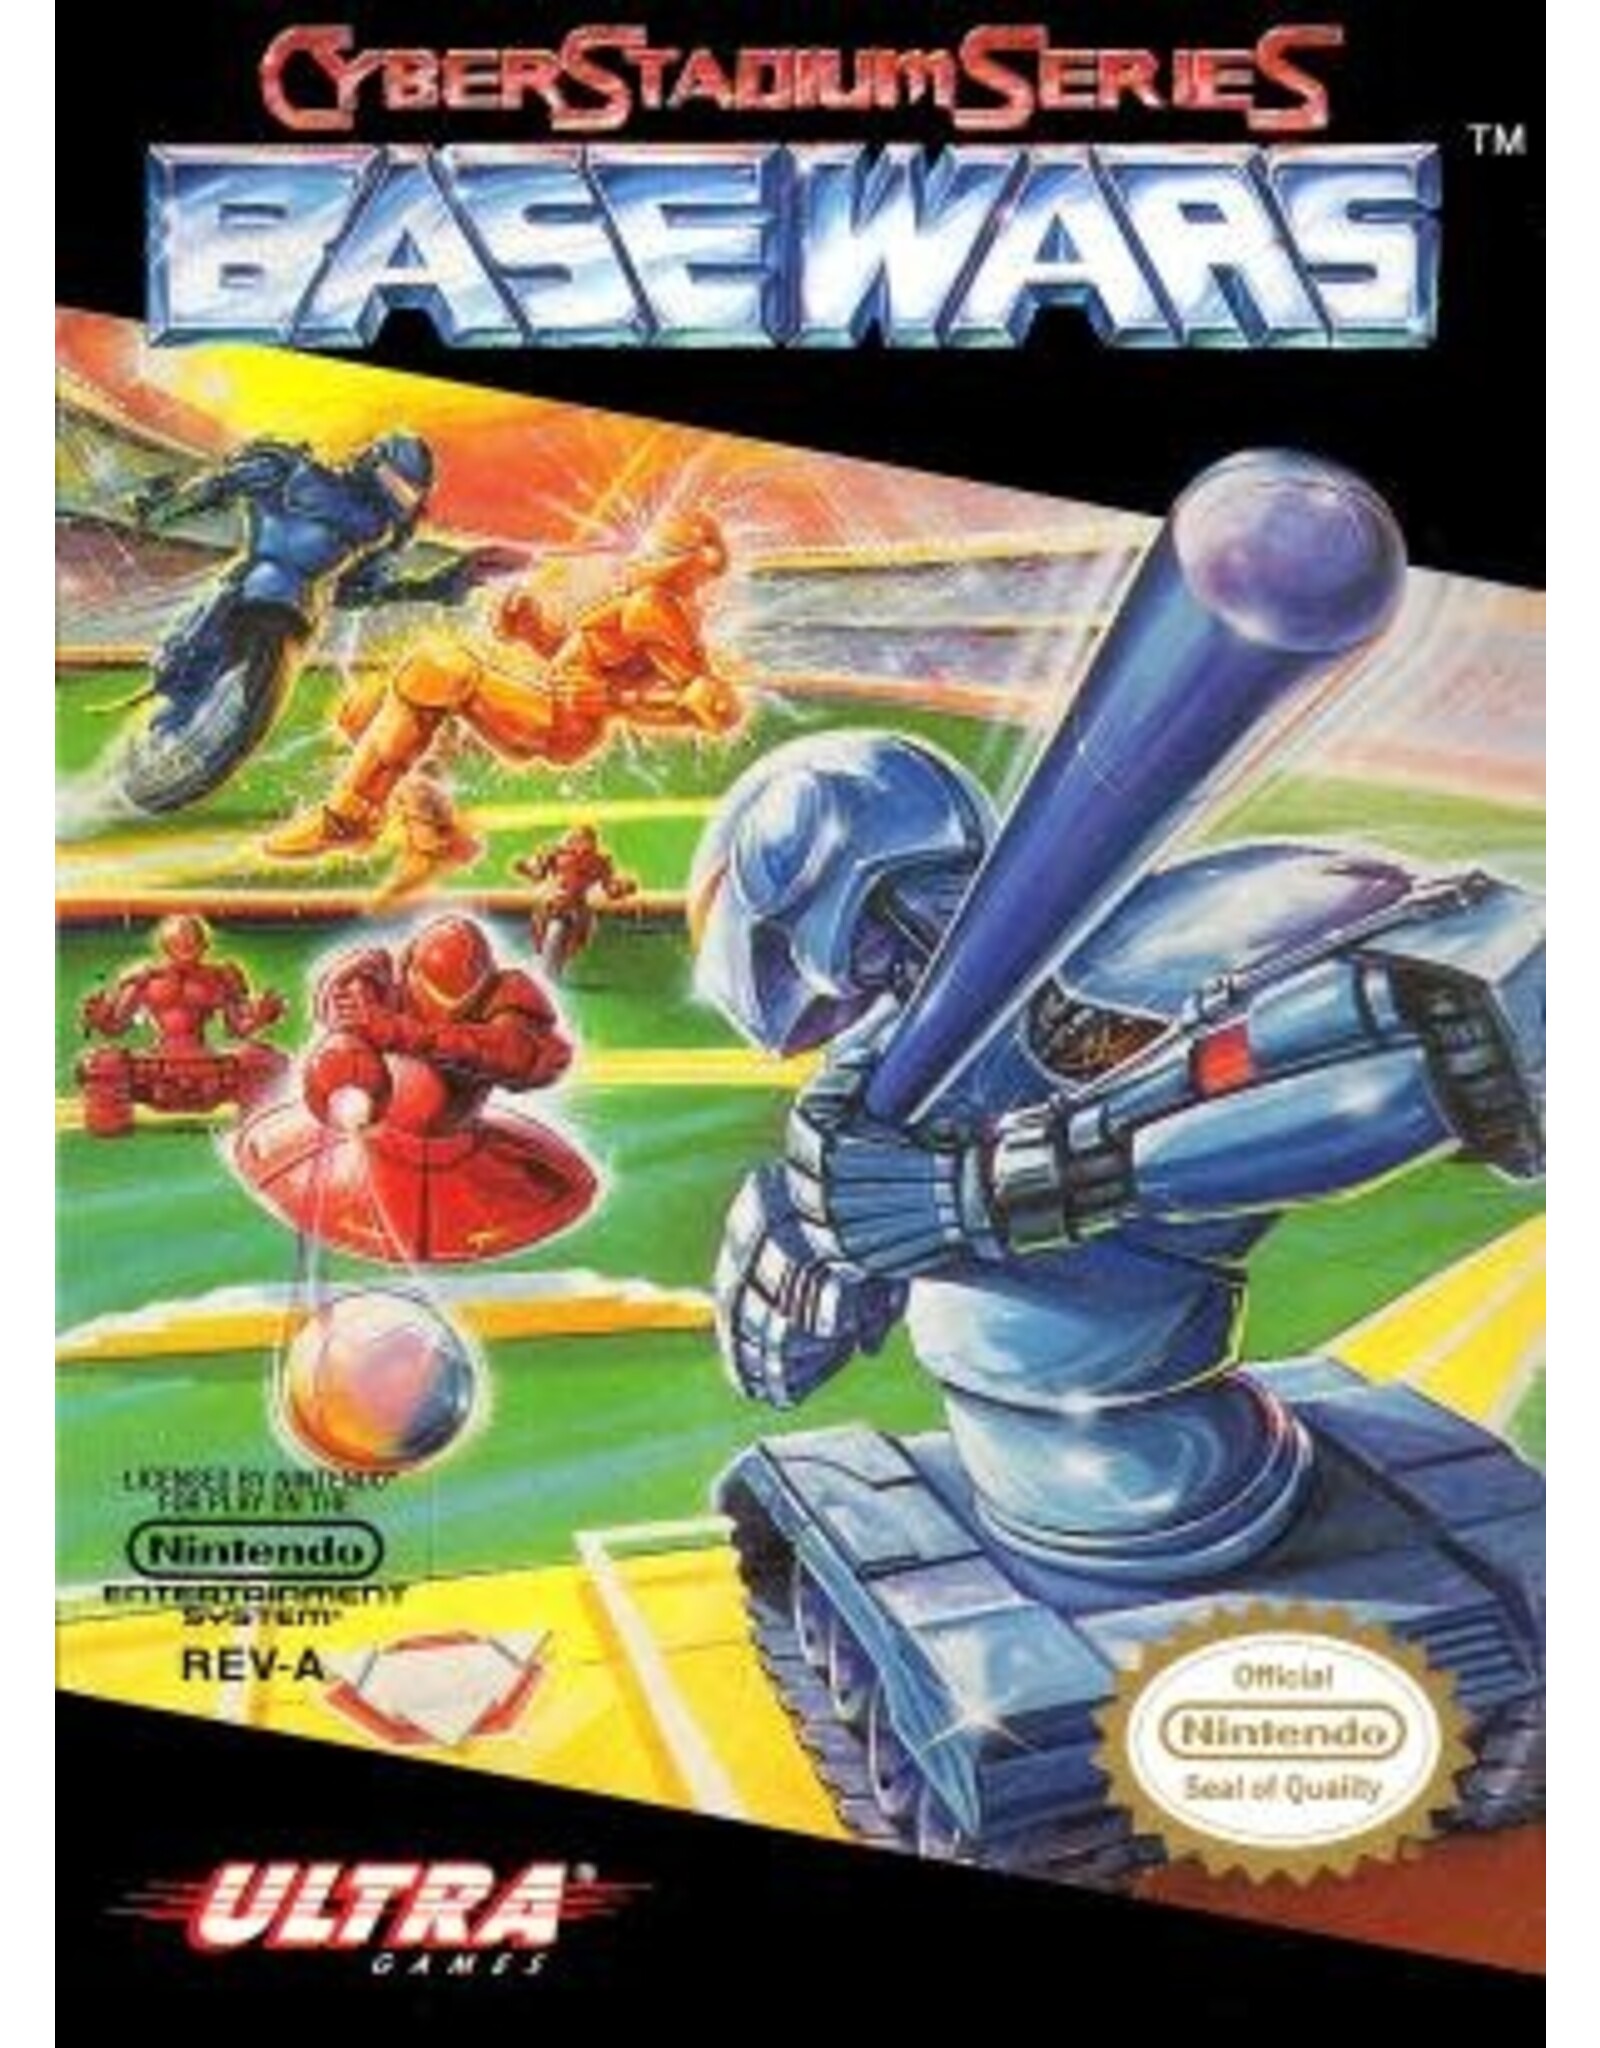 NES Cyberstadium Series Base Wars (CiB, Damaged Box)